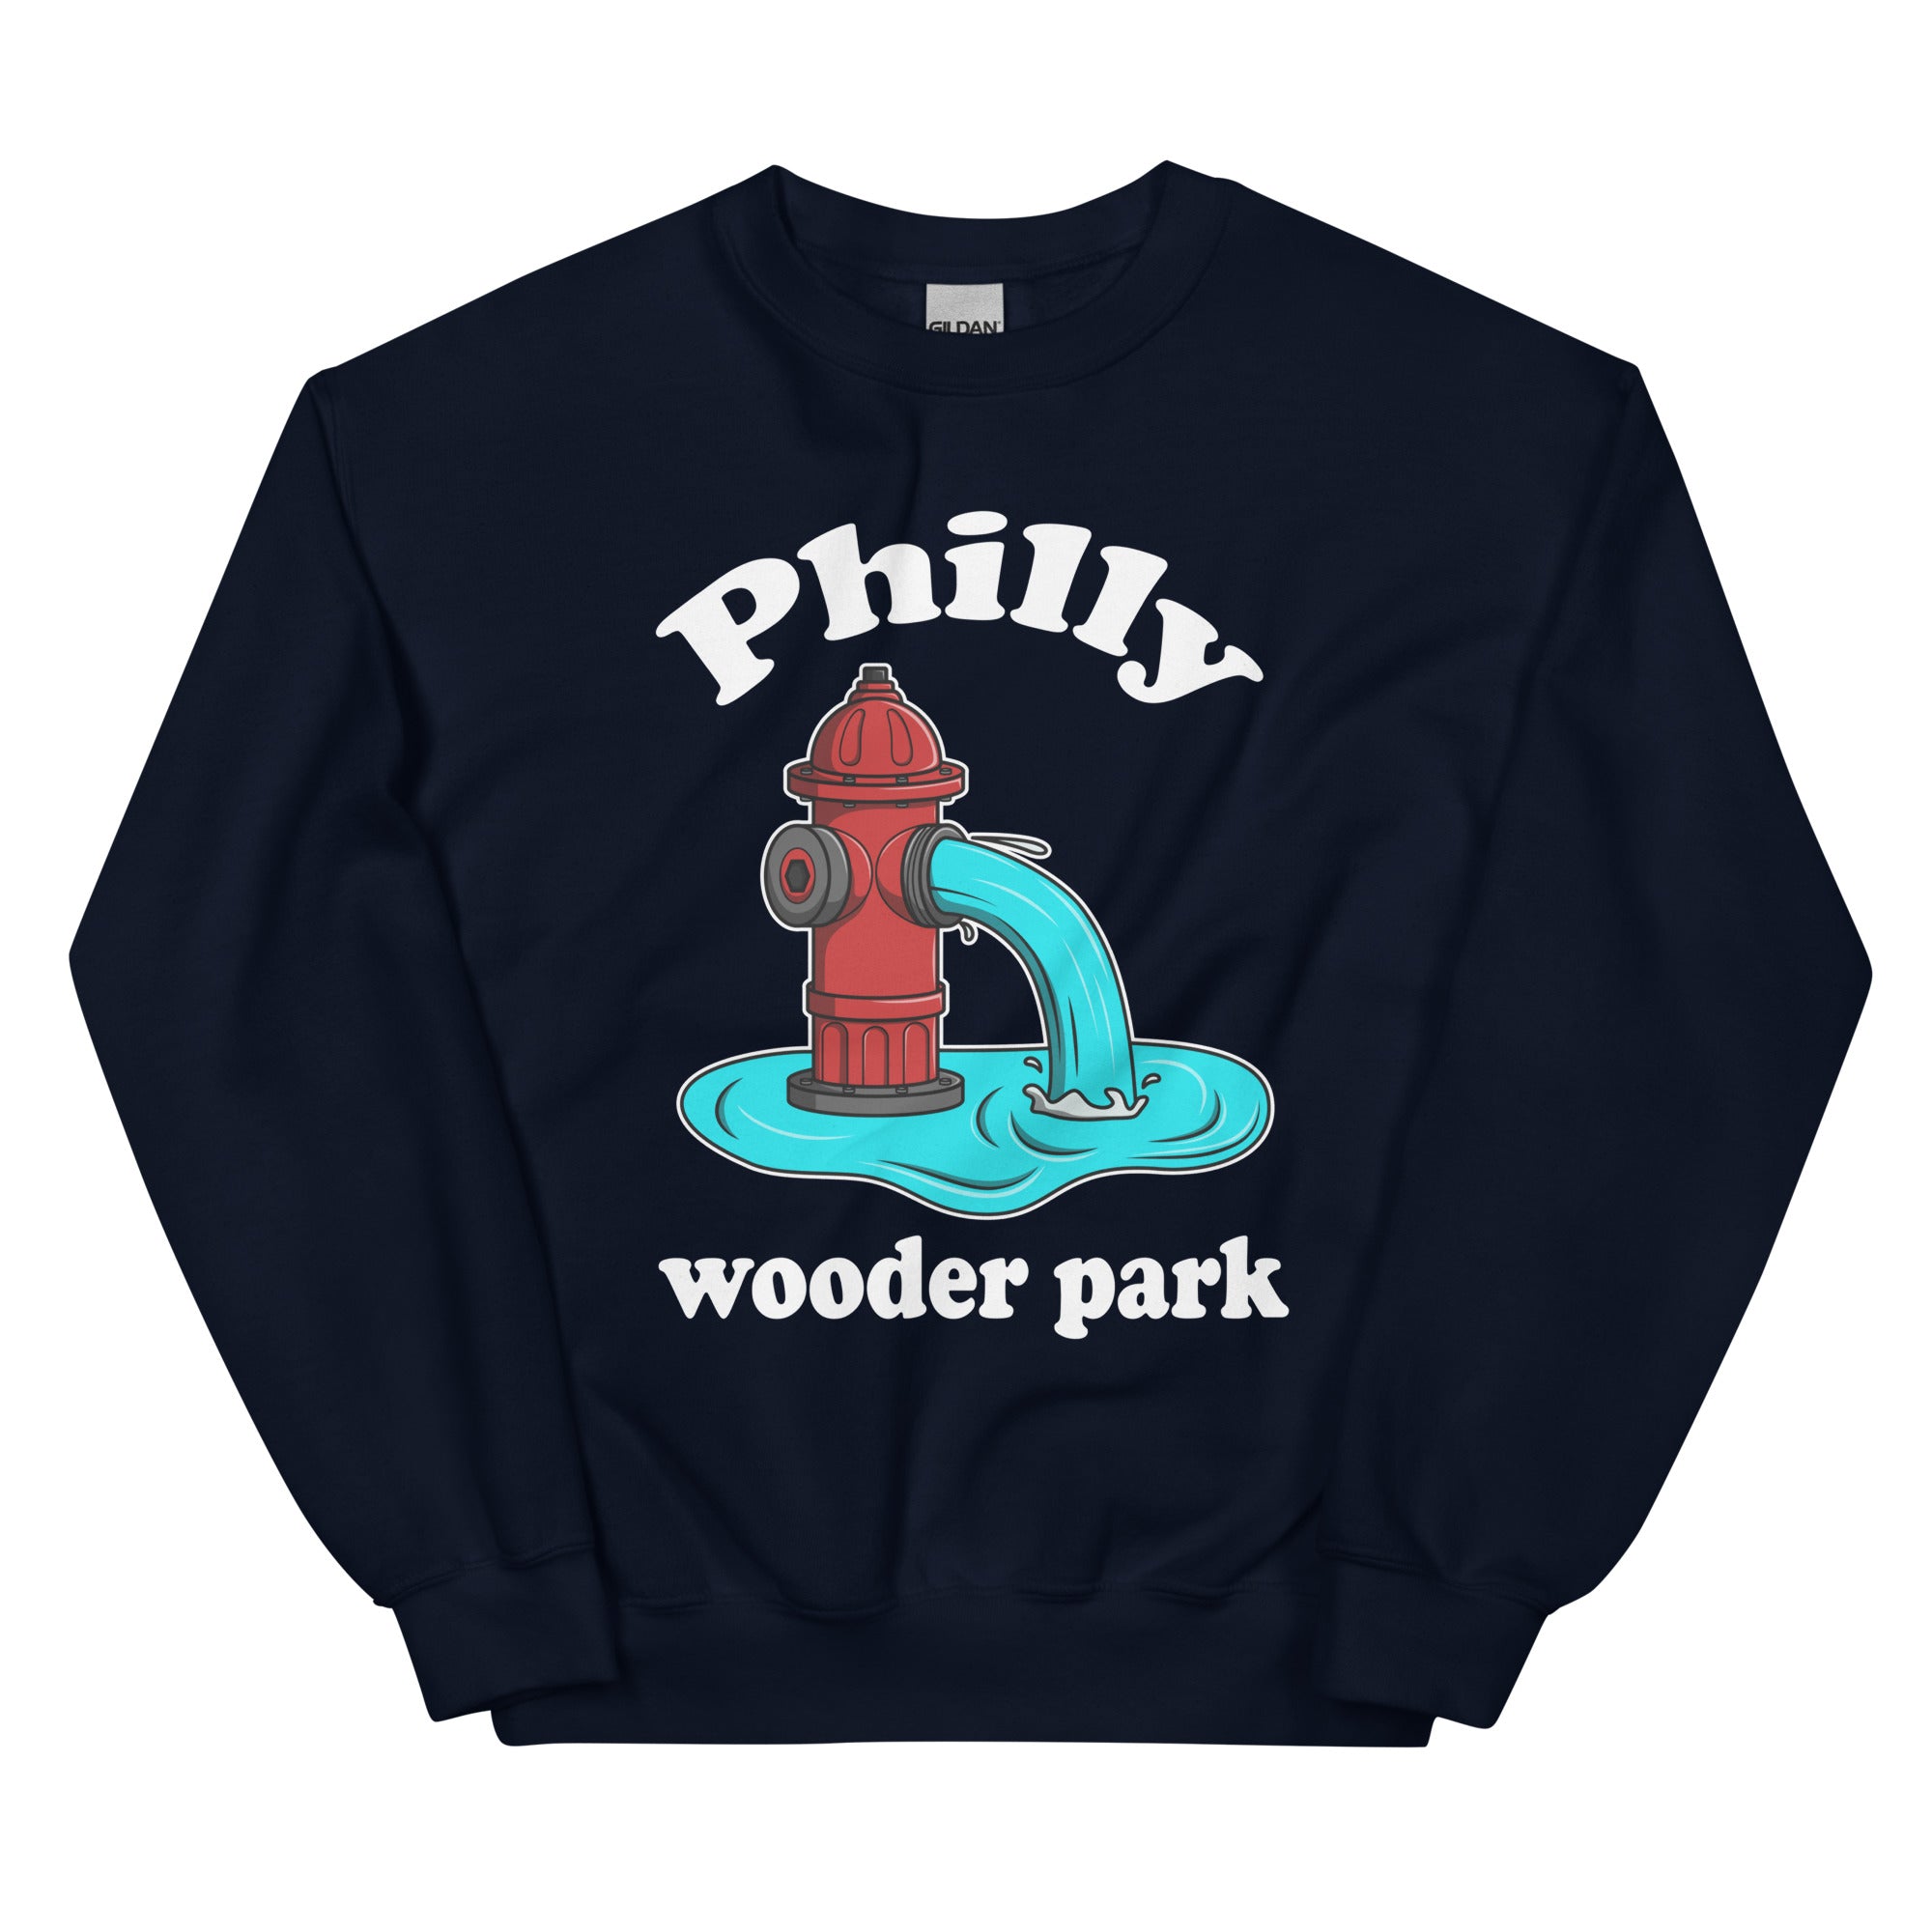 Philadelphia Philly wooder park fire hydrant funny navy blue sweatshirt Phillygoat